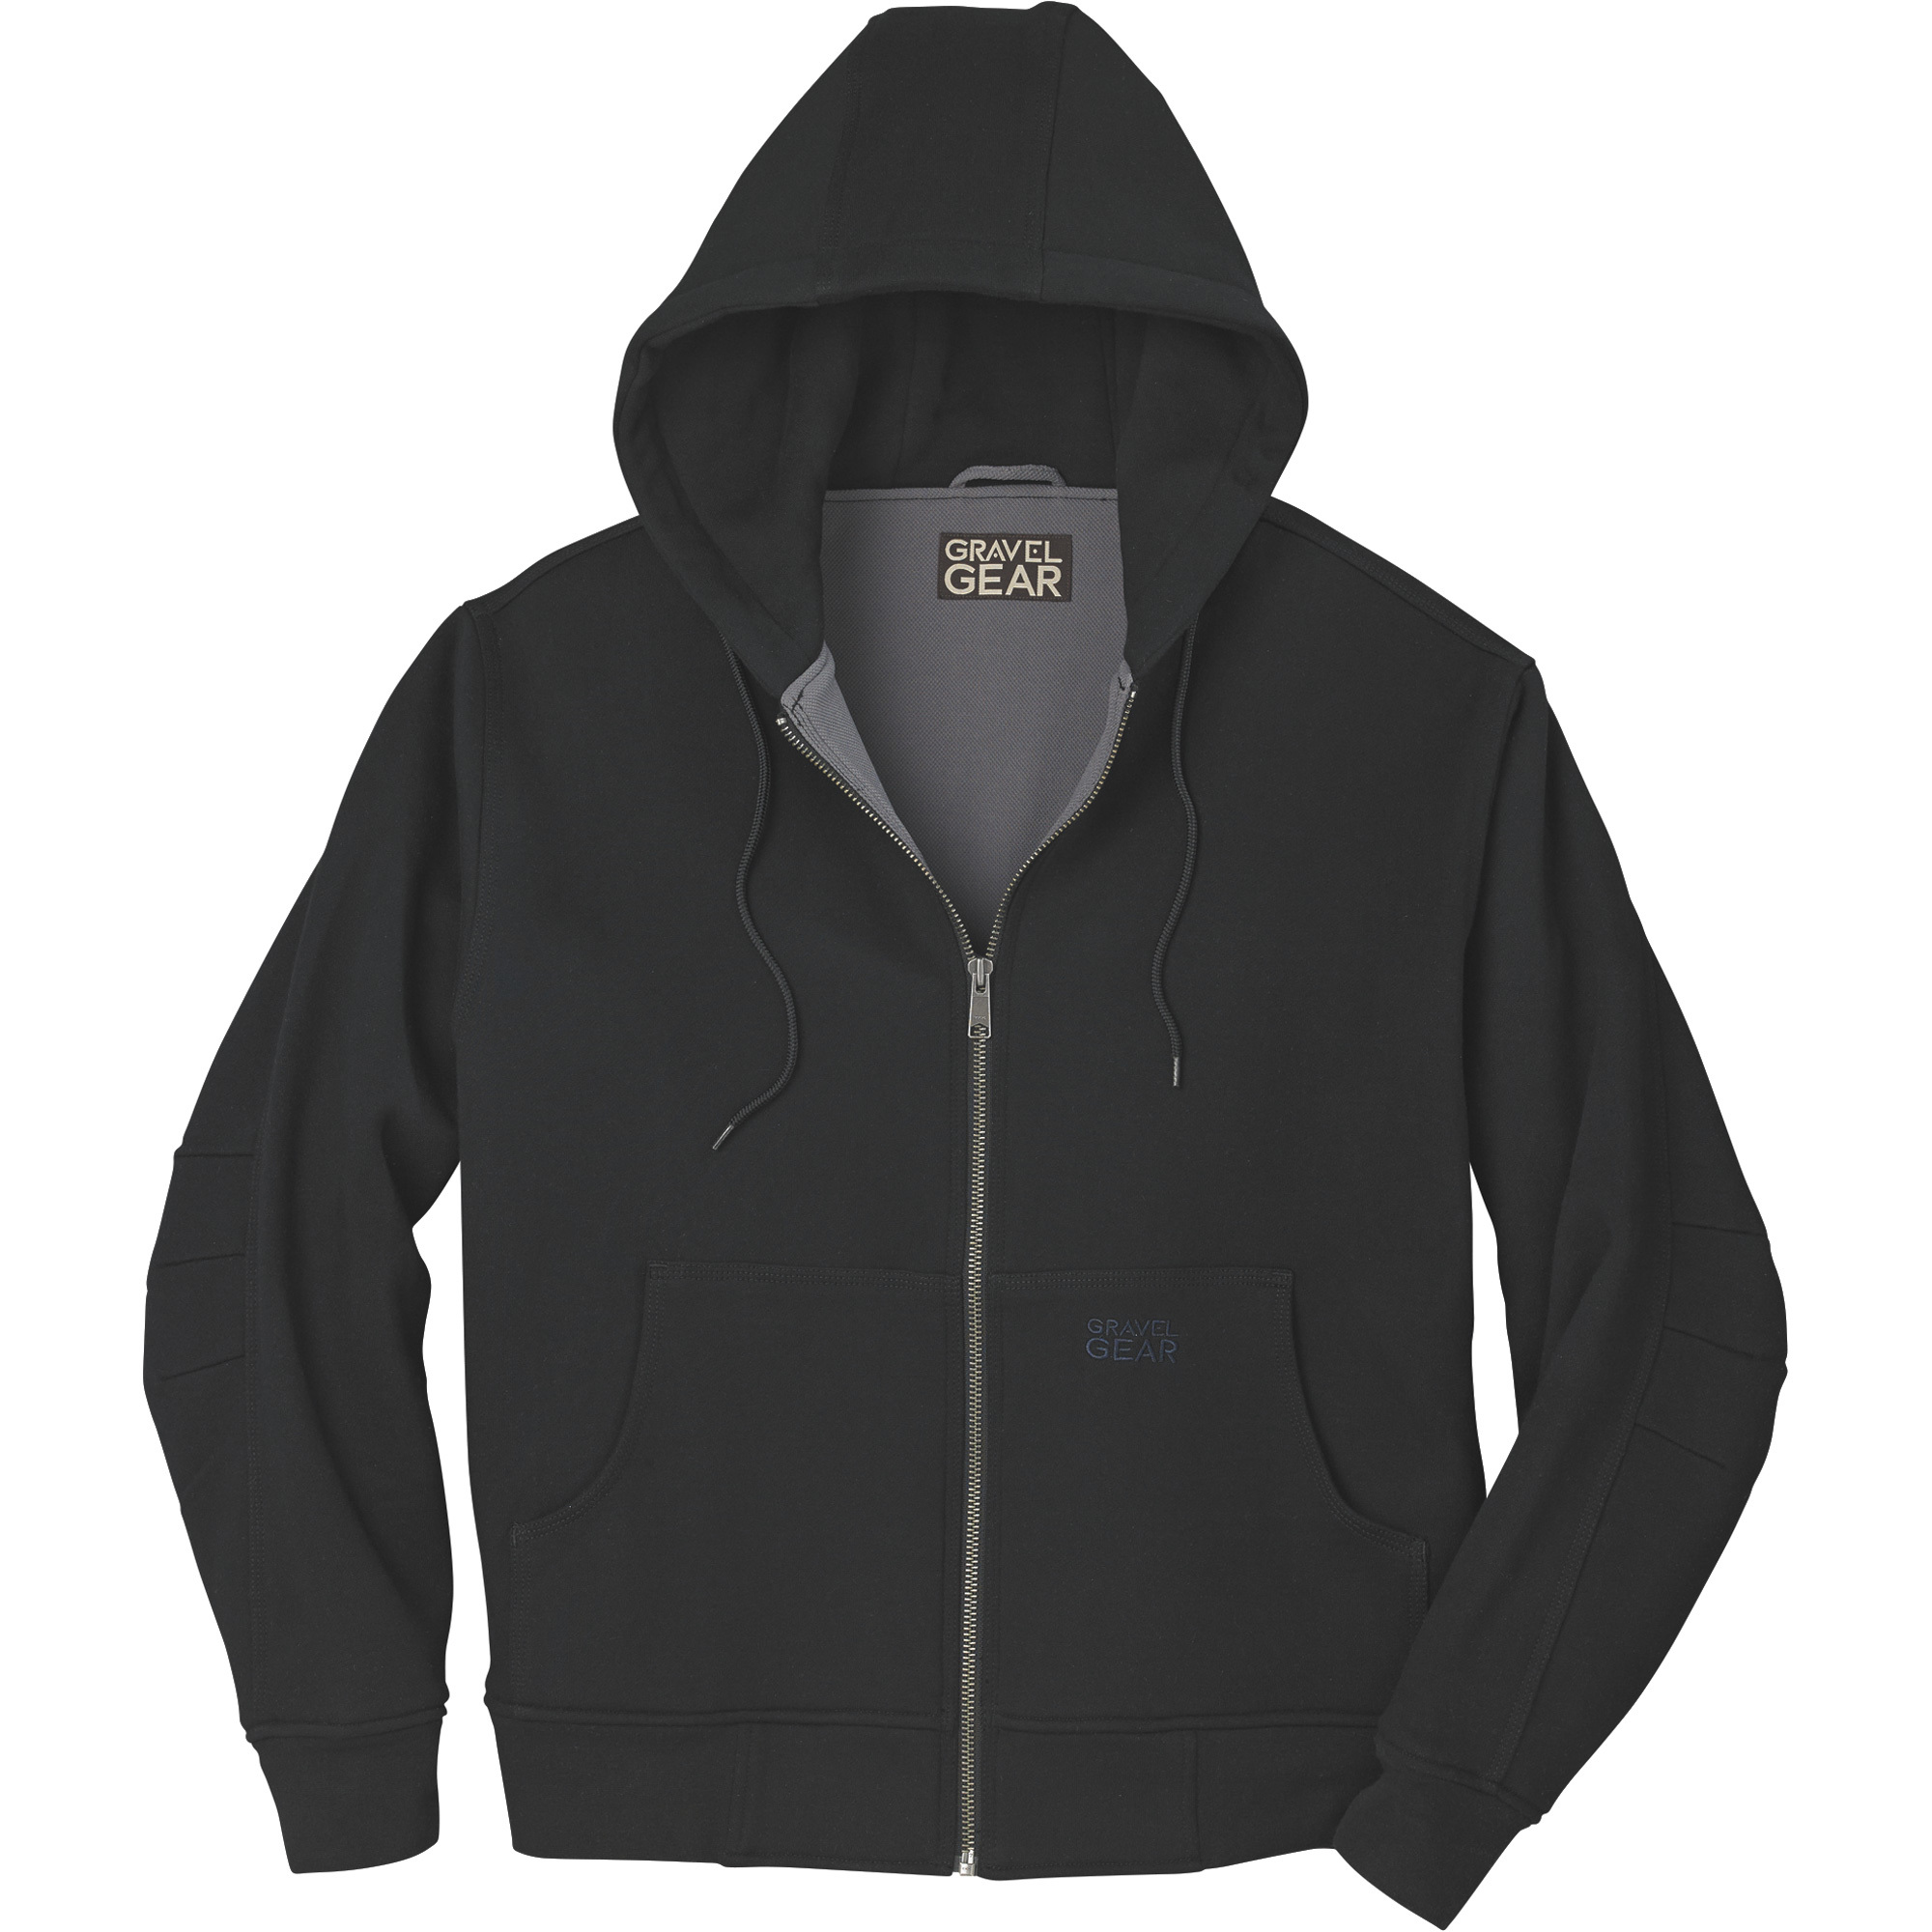 Gravel Gear Men's Hooded Thermal-Lined Sweatshirt - Black, Large